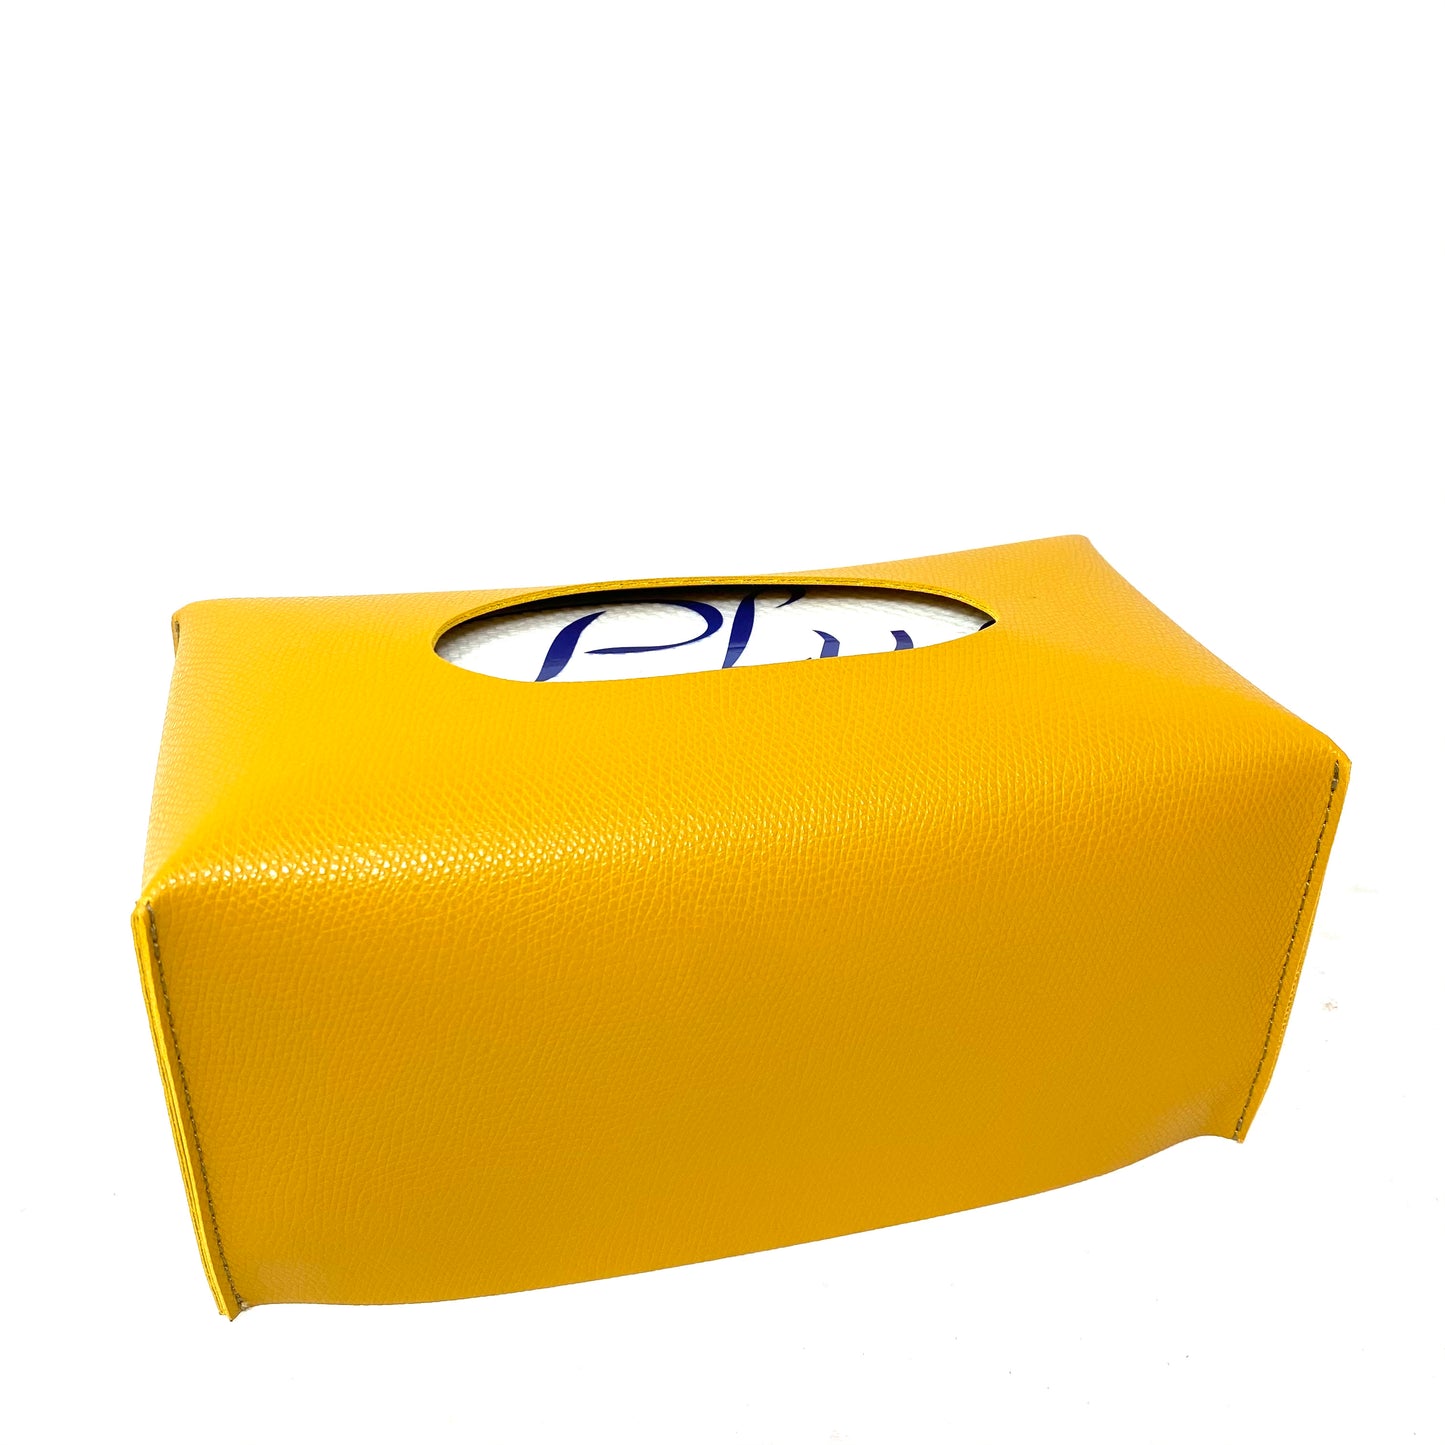 Tissue case holder